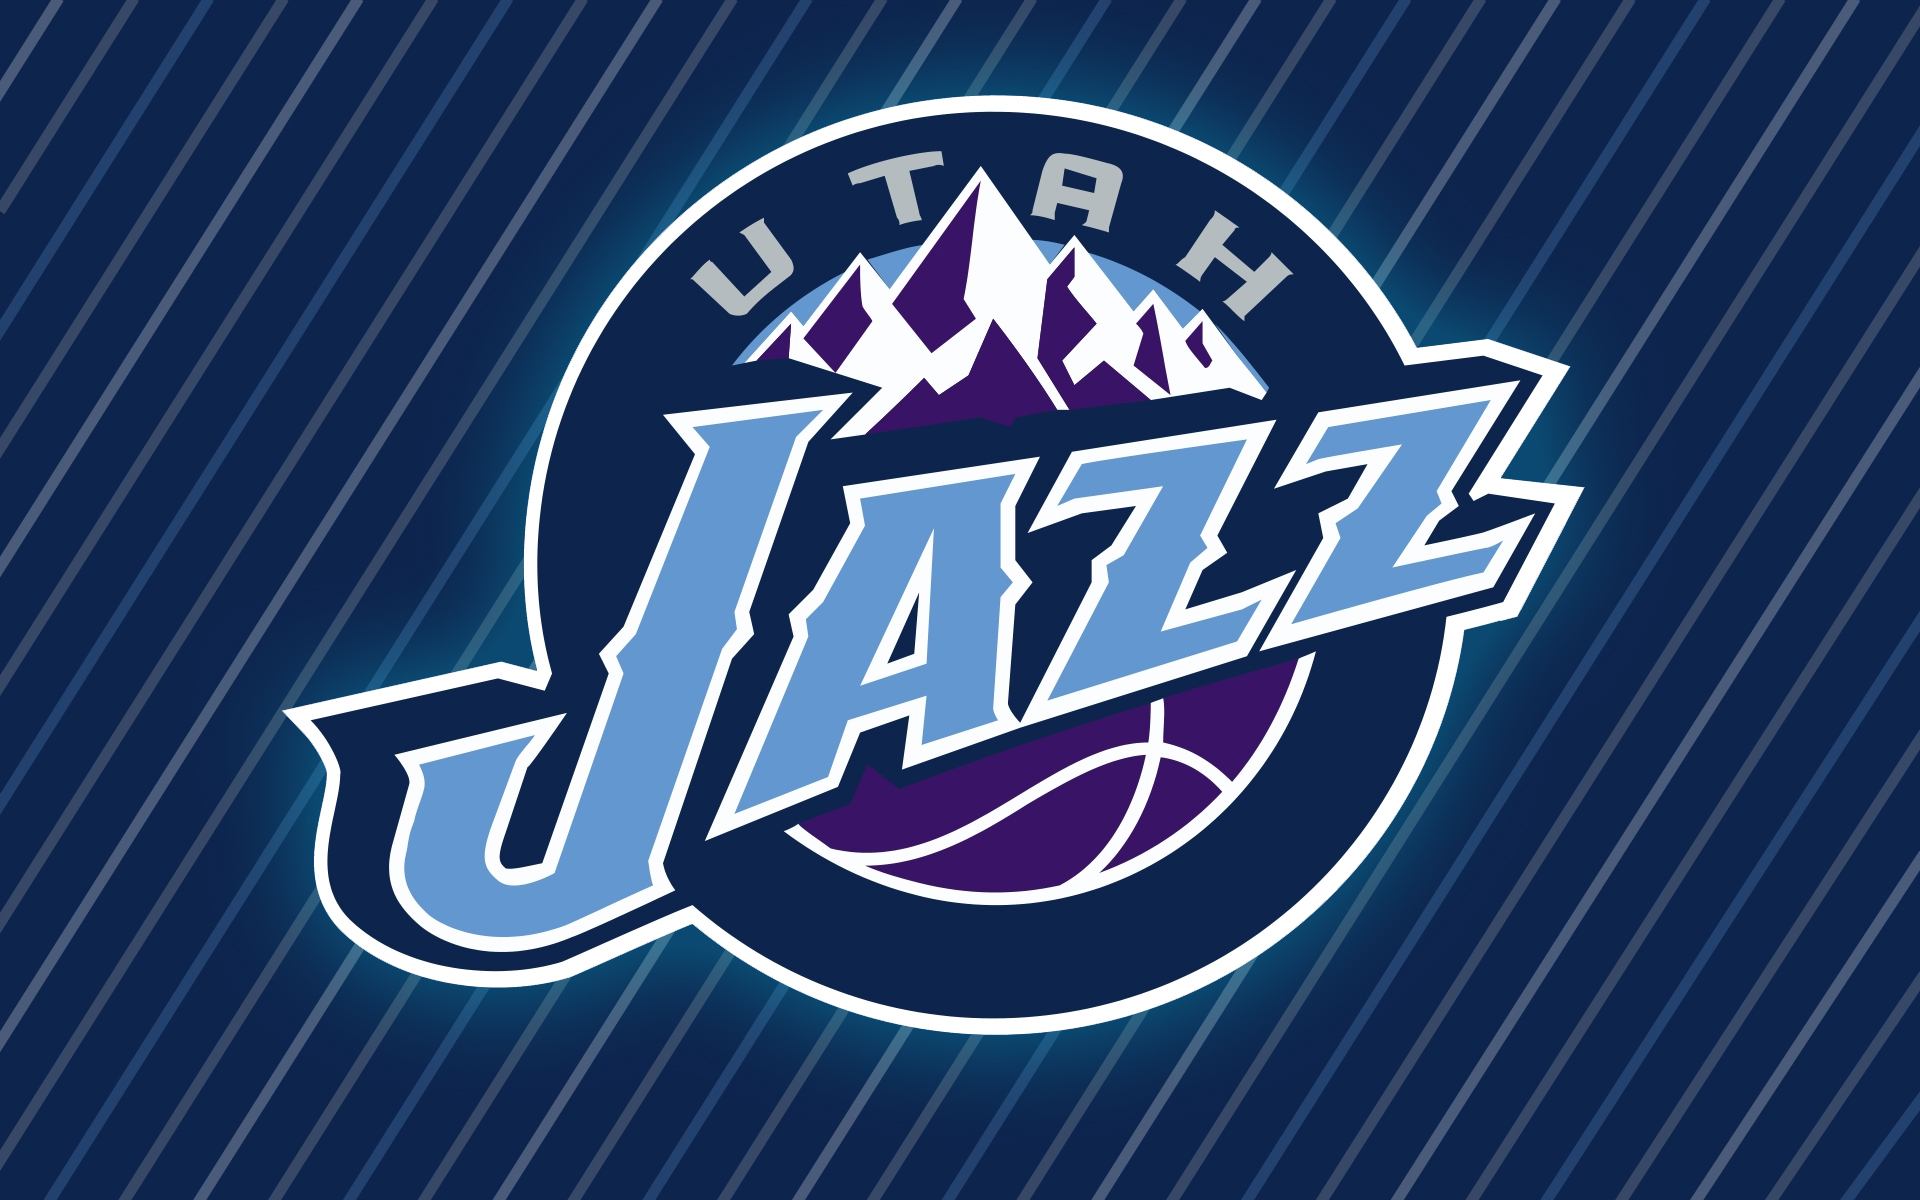 Utah Jazz HD Wallpaper and Background